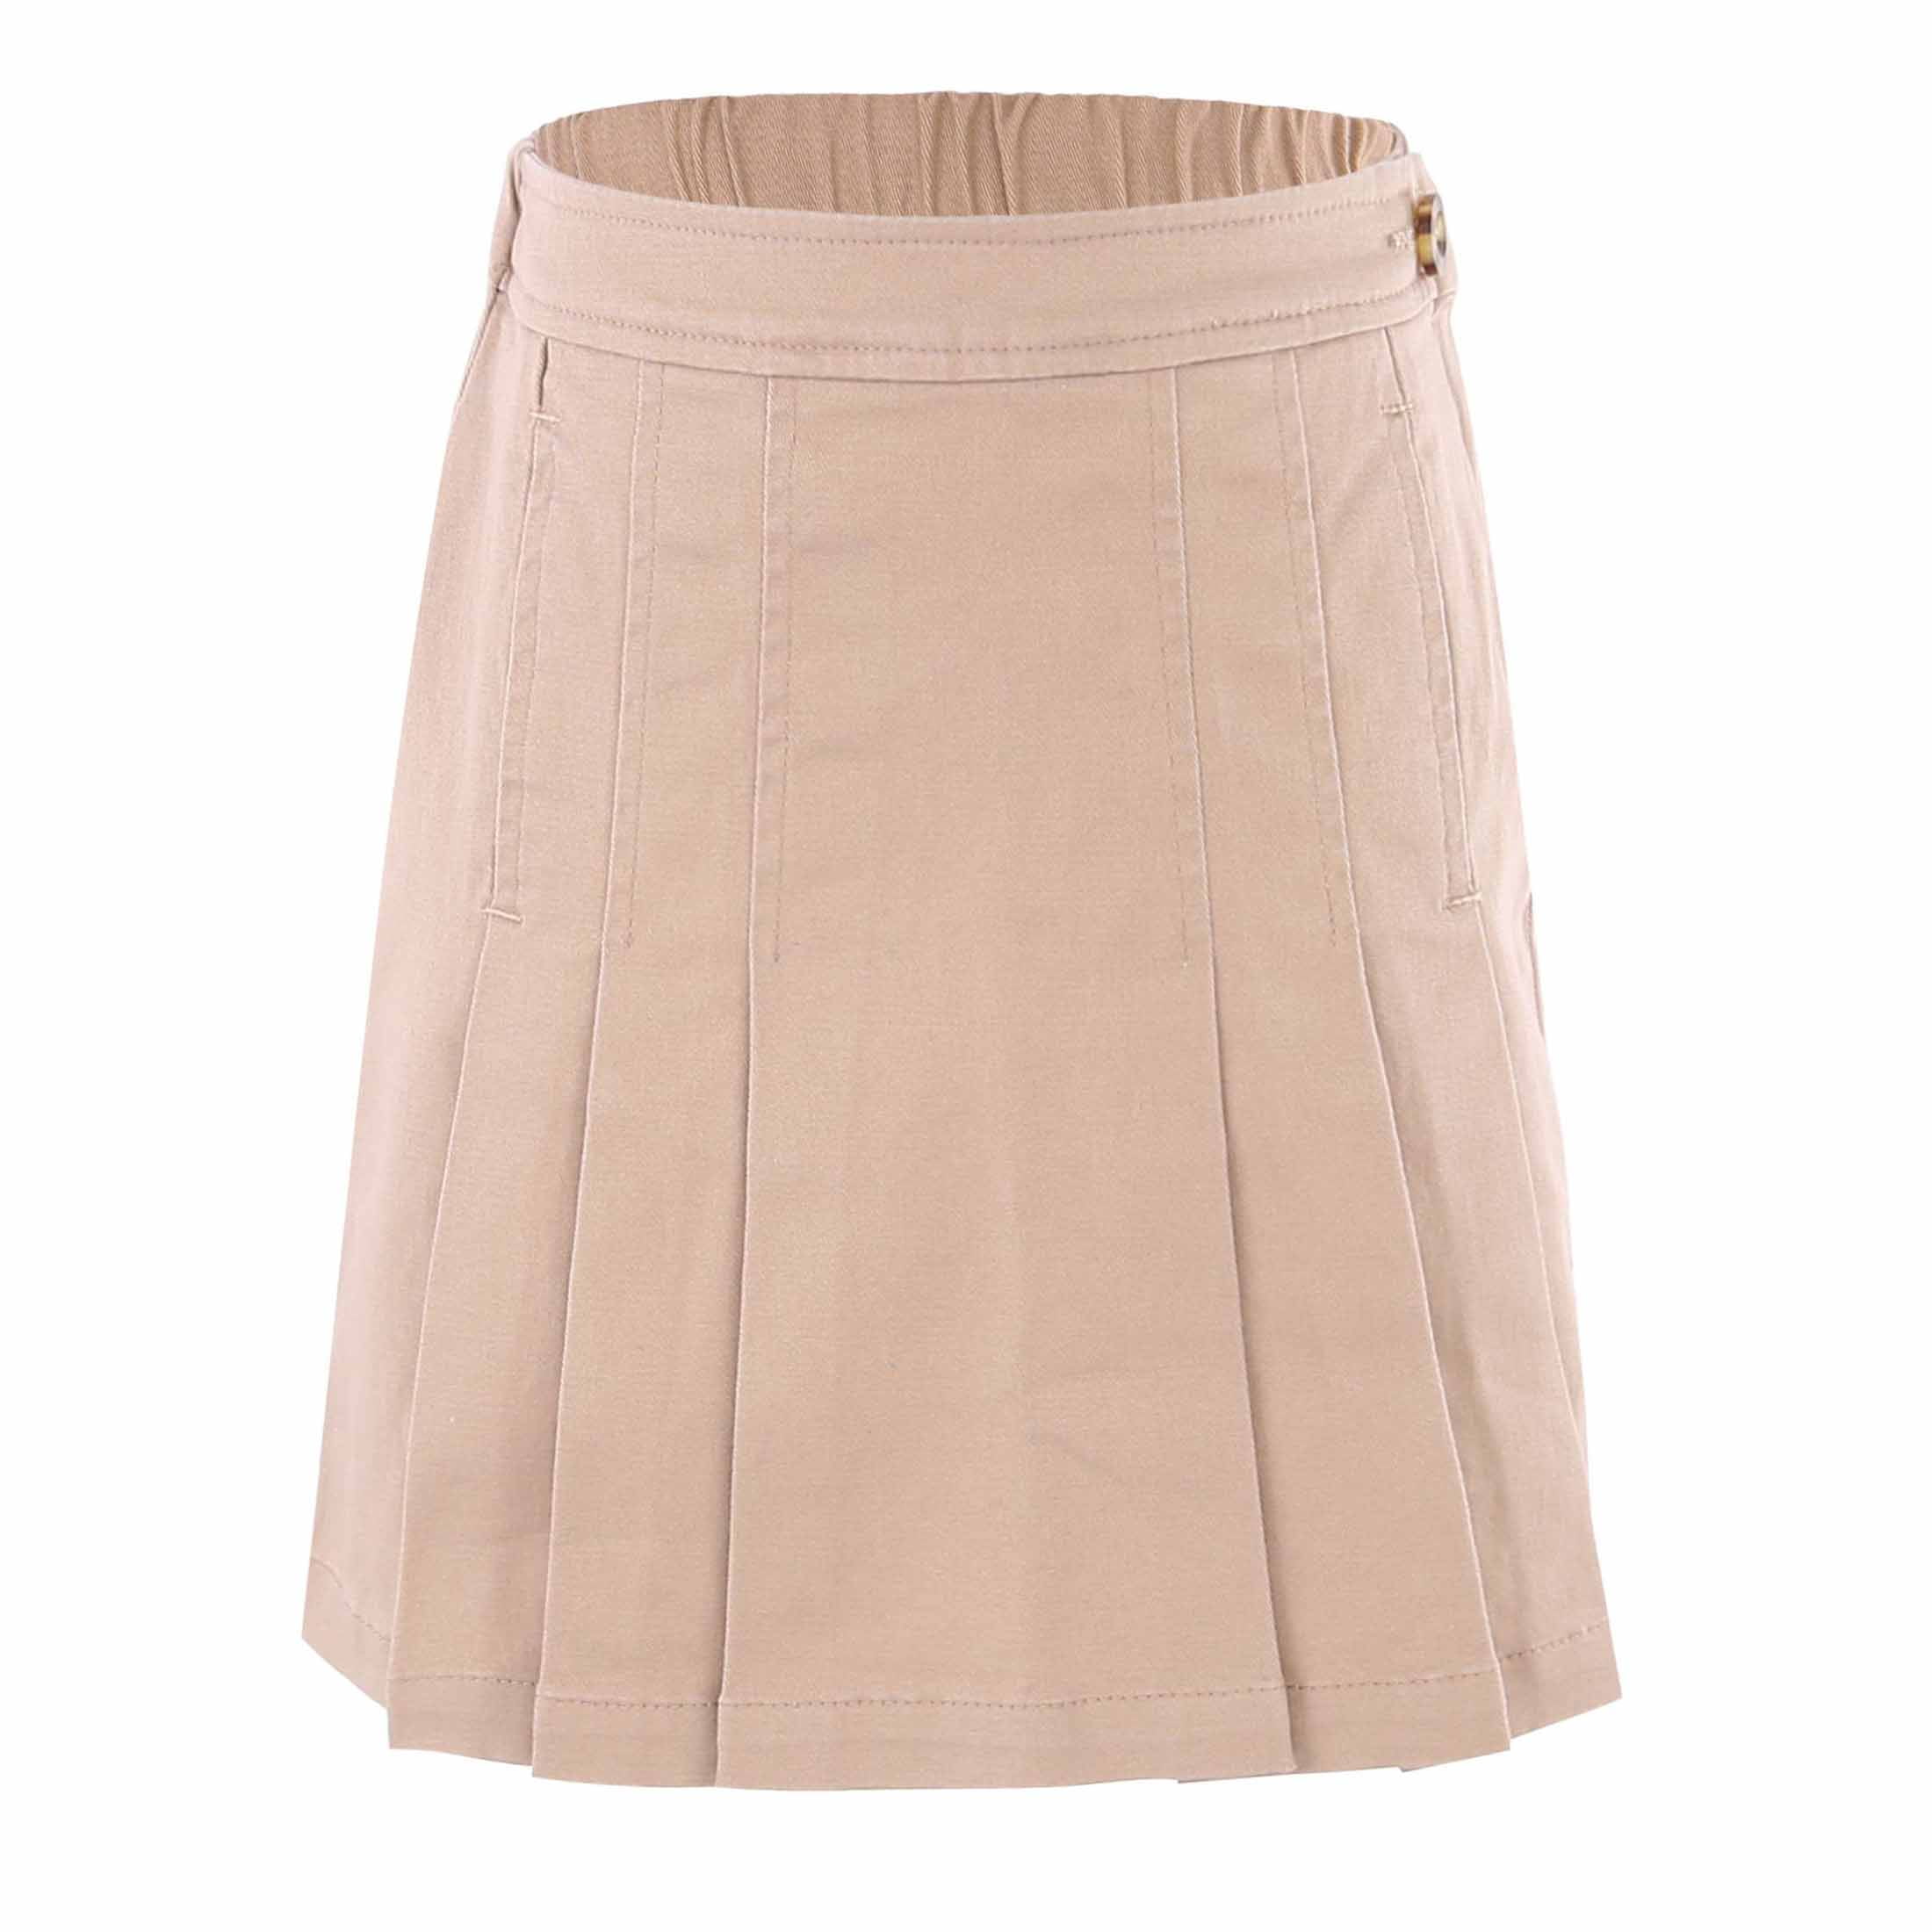 Bienzoe Girl's Cotton Stretchy Elastic Wasit School Uniforms Pleated Skirt 